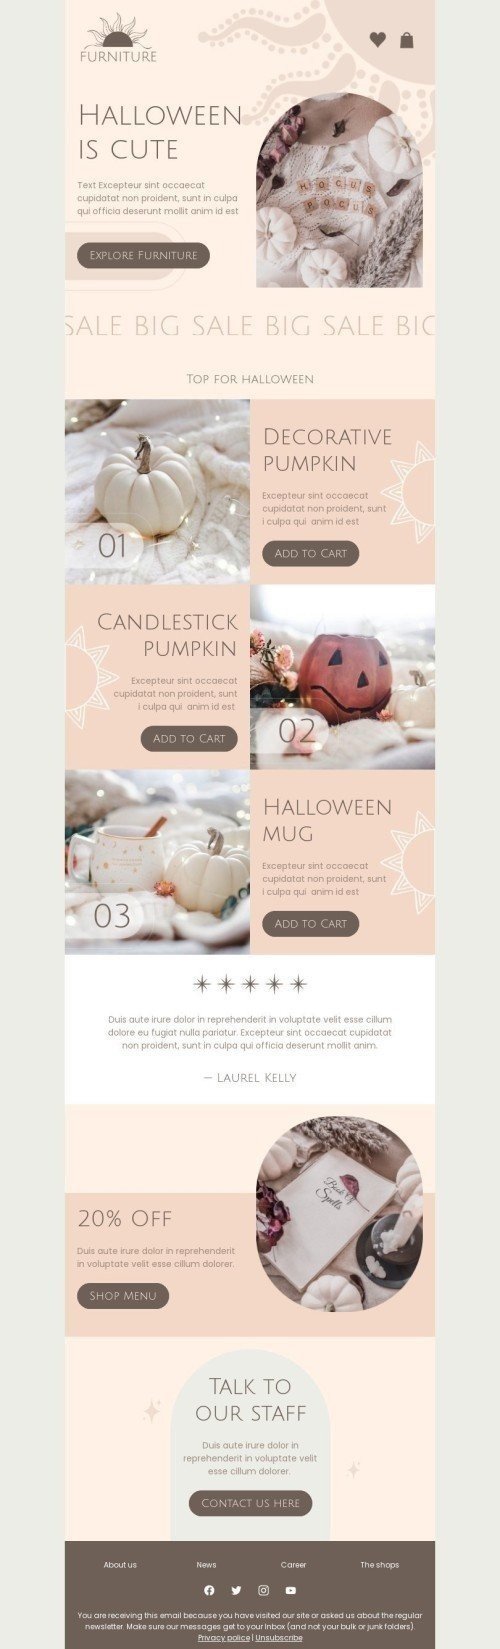 Halloween Email Template "Halloween is cute" for Furniture, Interior & DIY industrydesktop view